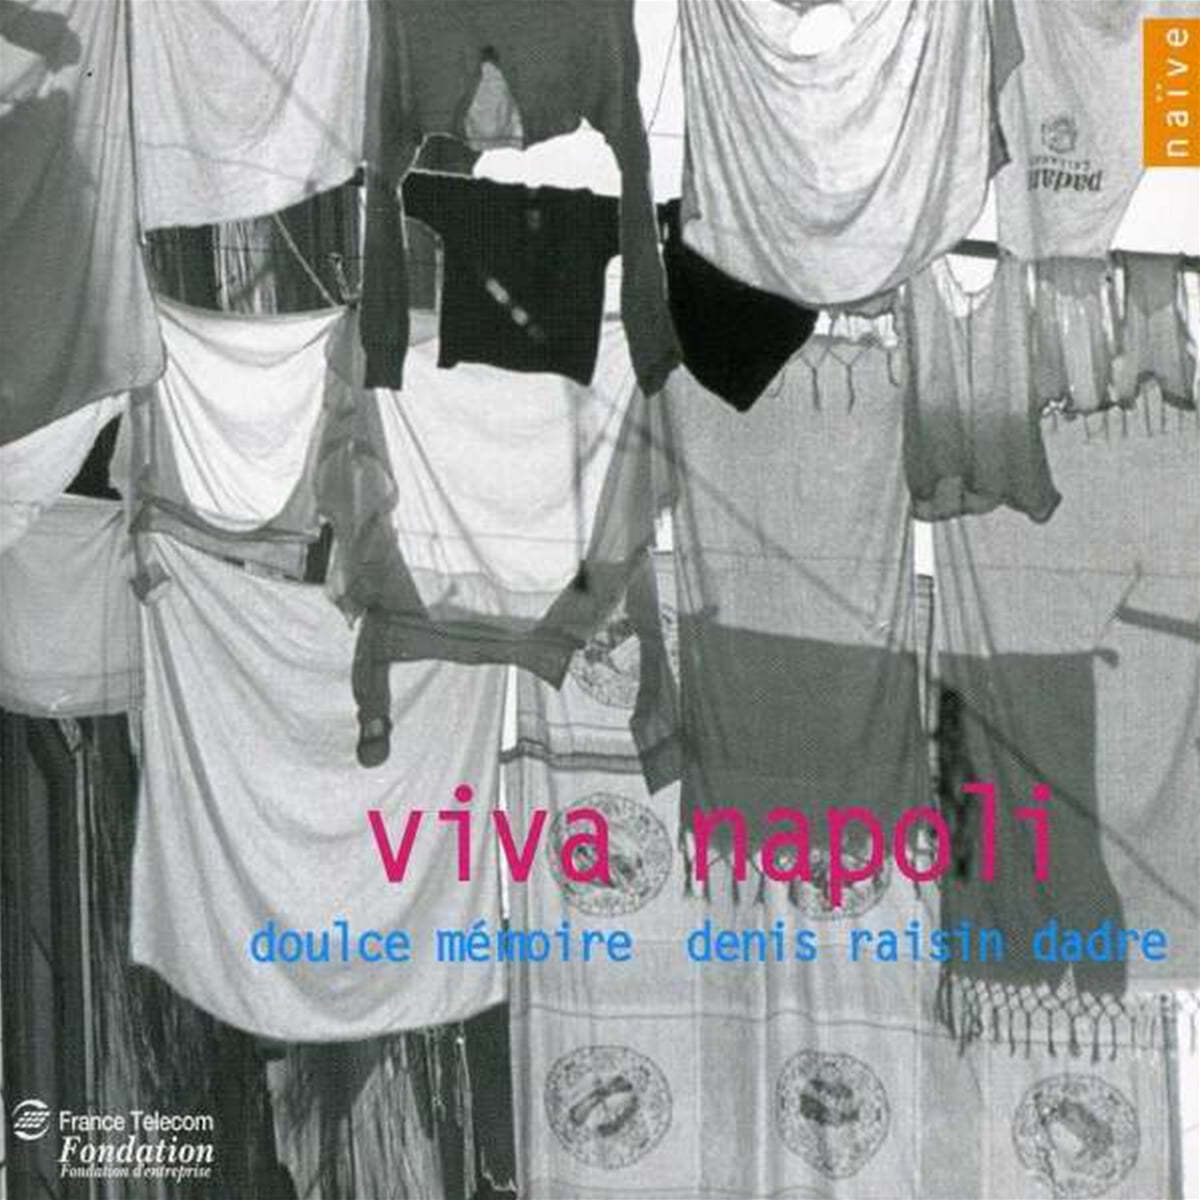 Doulce Memoire Ensemble 비바 나폴리 - 돌체 메므와 (Viva Napoli) 